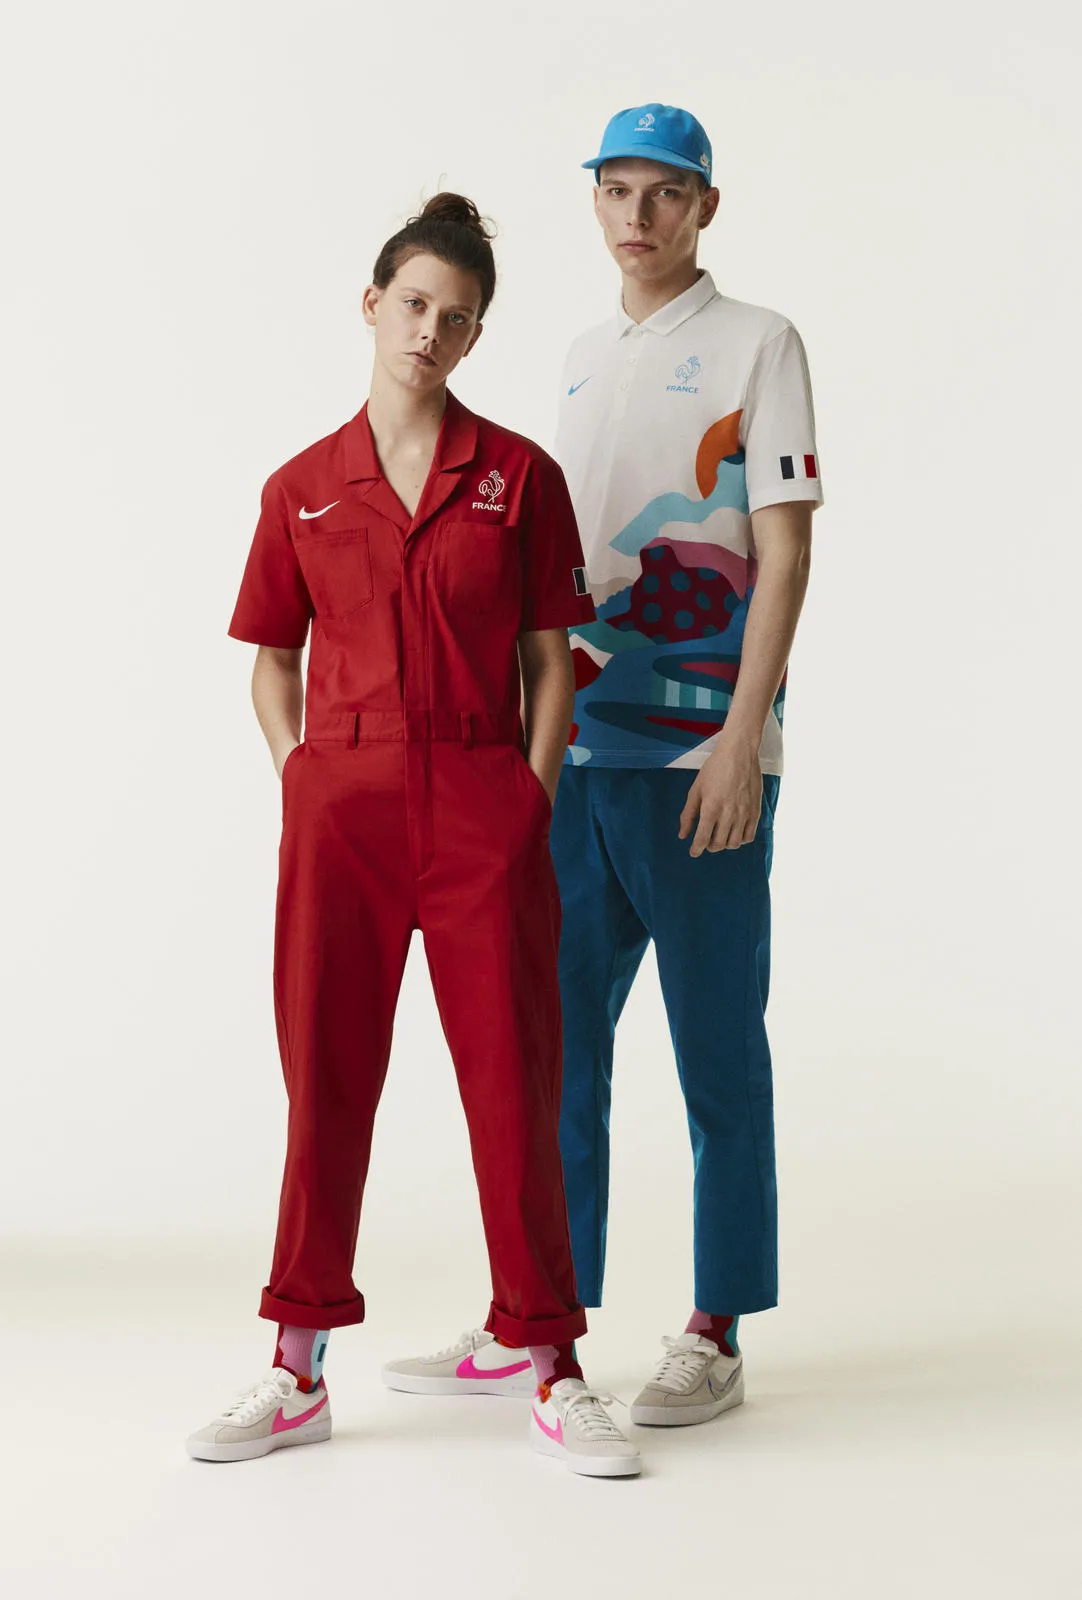 Op tijd cijfer Niet modieus Nike teams up with Piet Parra to design Olympic Skateboarding uniforms